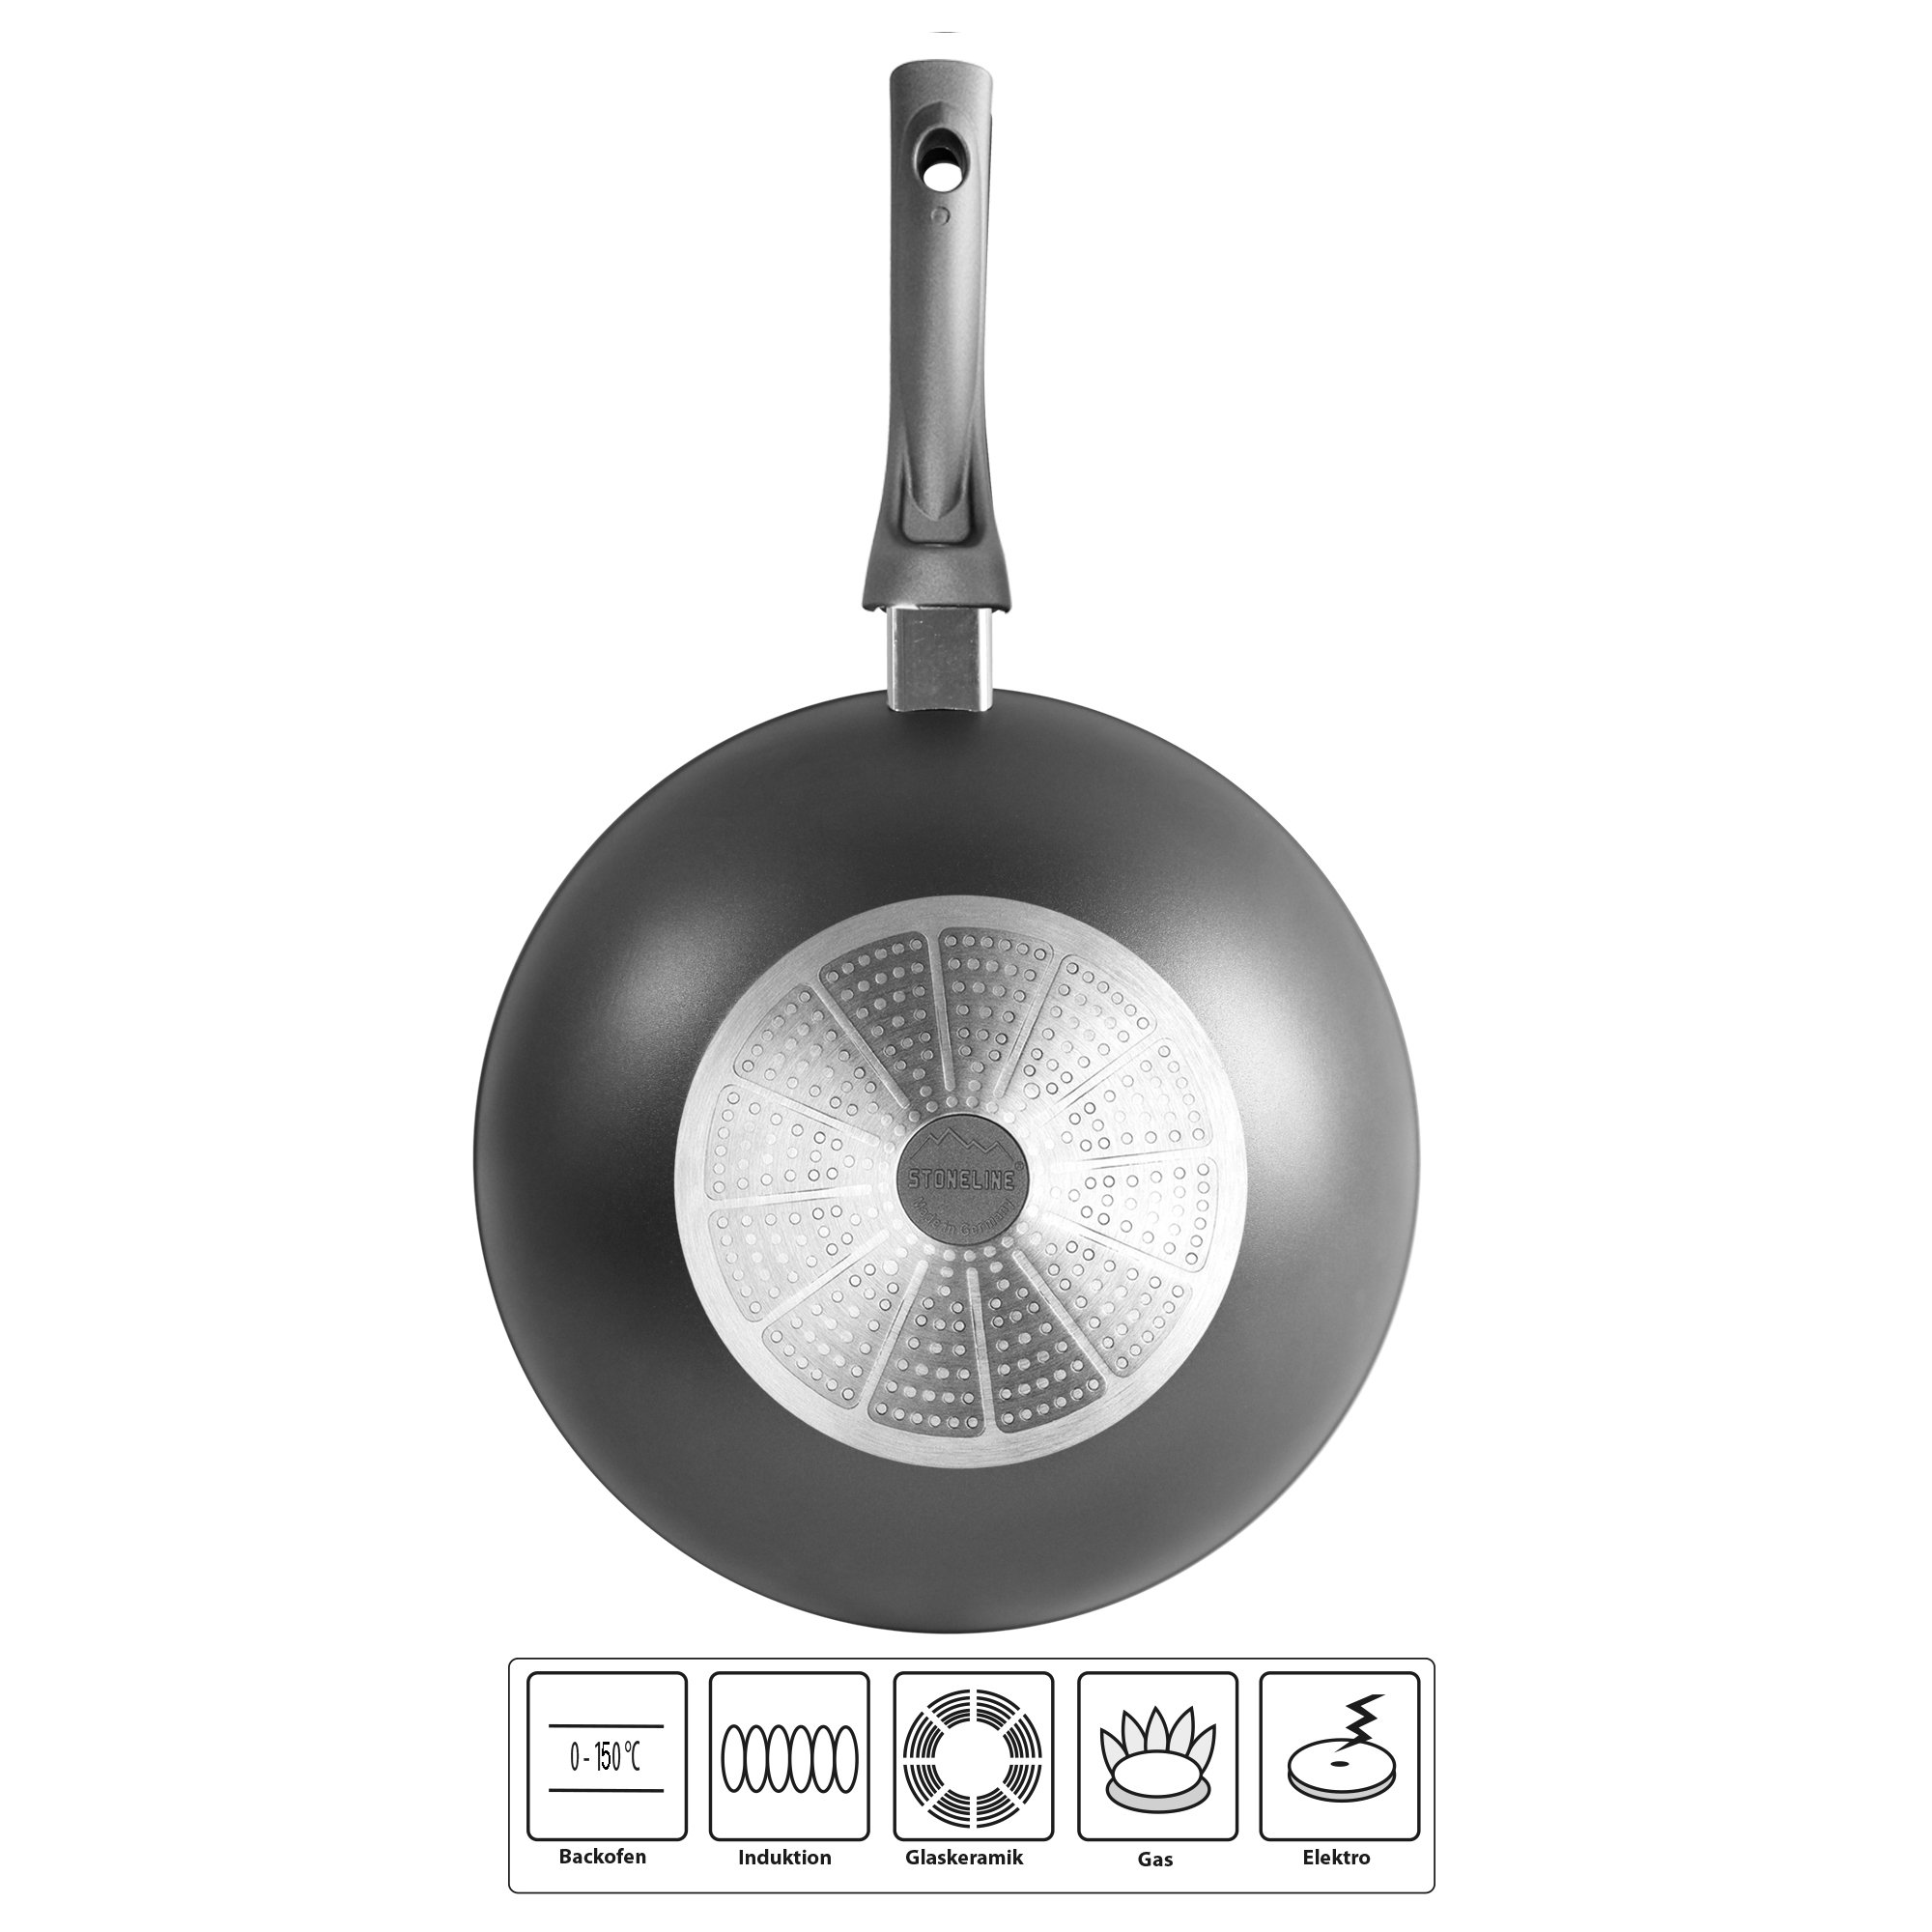 STONELINE® Wok Pan 30 cm, Non-Stick Pan | Made in Germany | GOURMUNDO